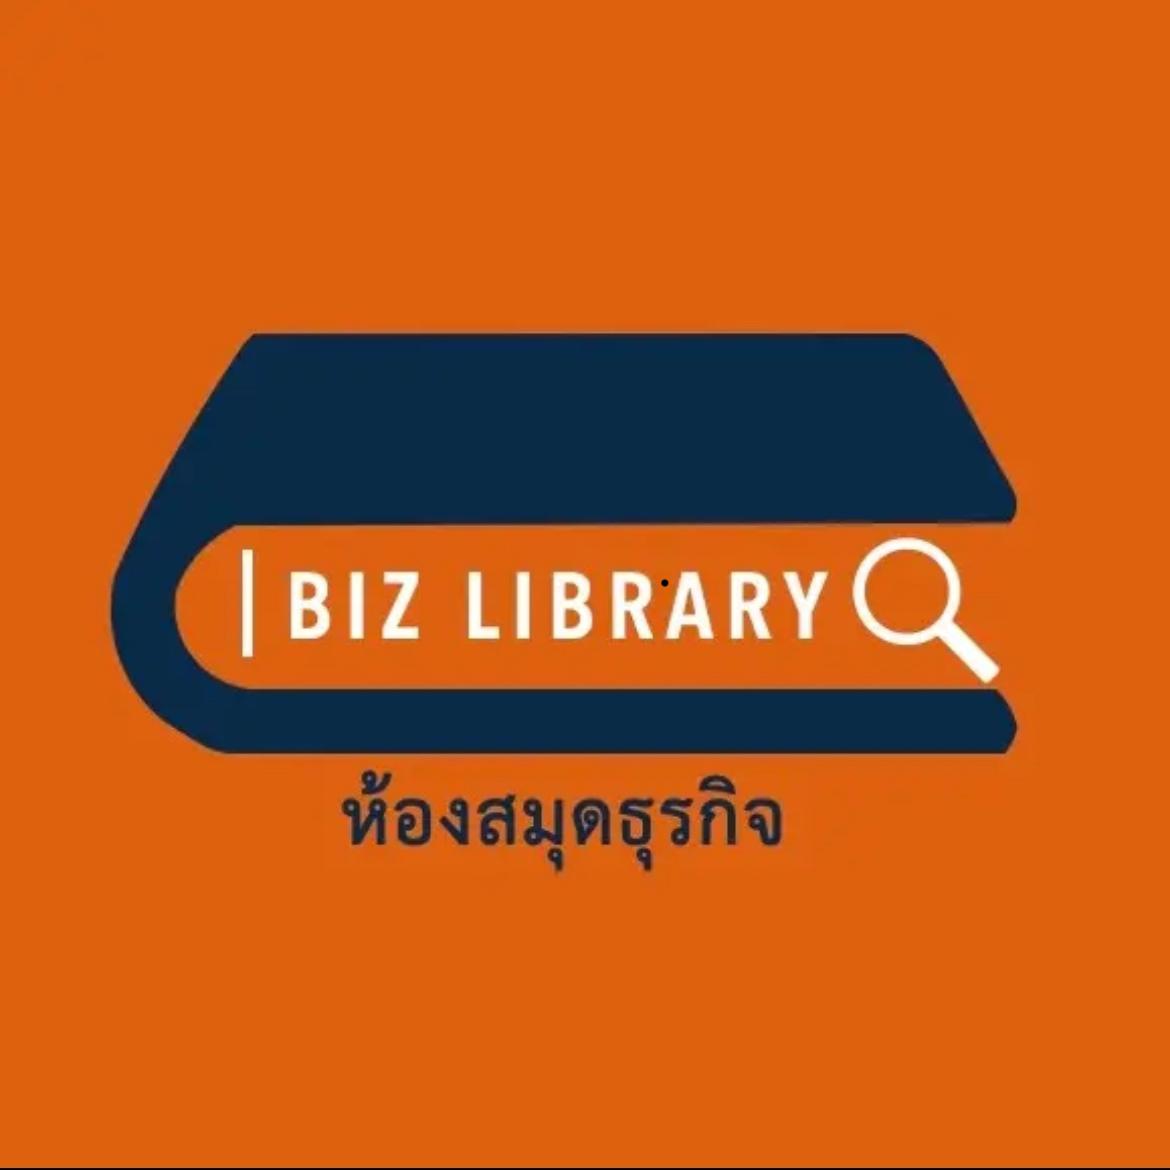 Biz Library